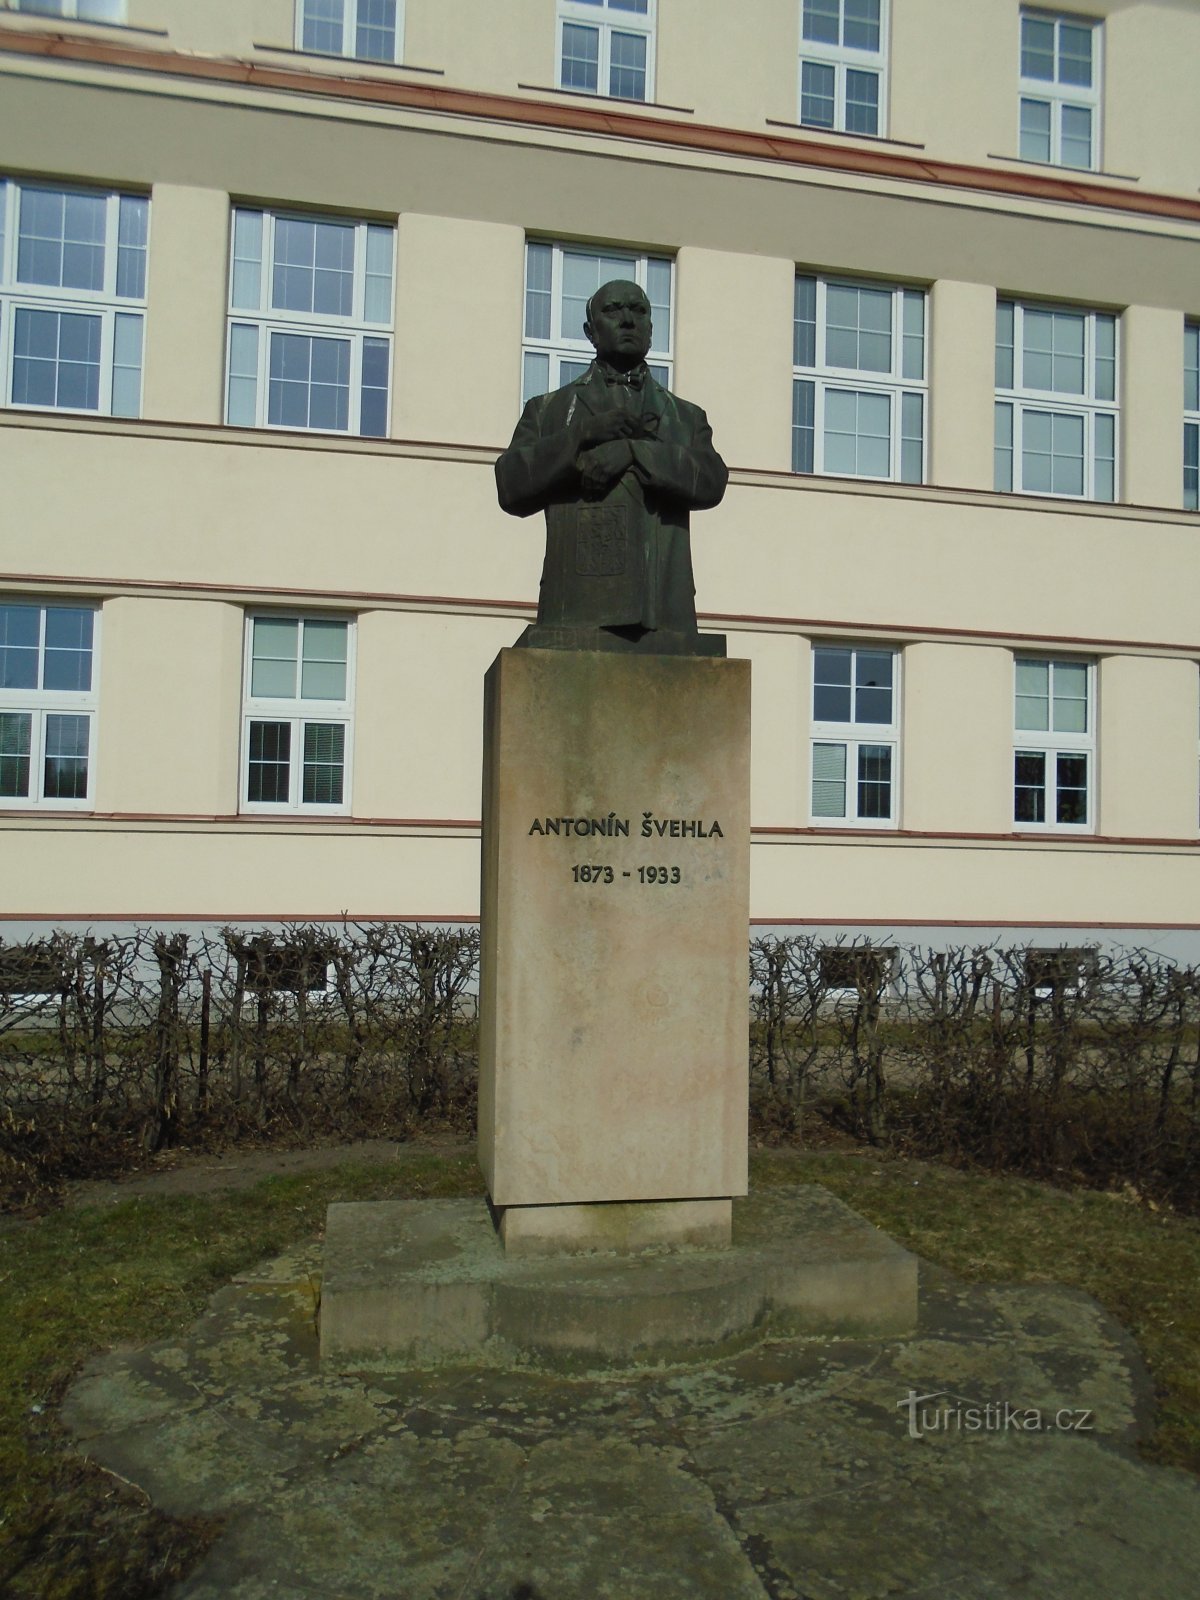 Monument voor Antonín Švehla (Hradec Králové, 4.3.2018 maart XNUMX)